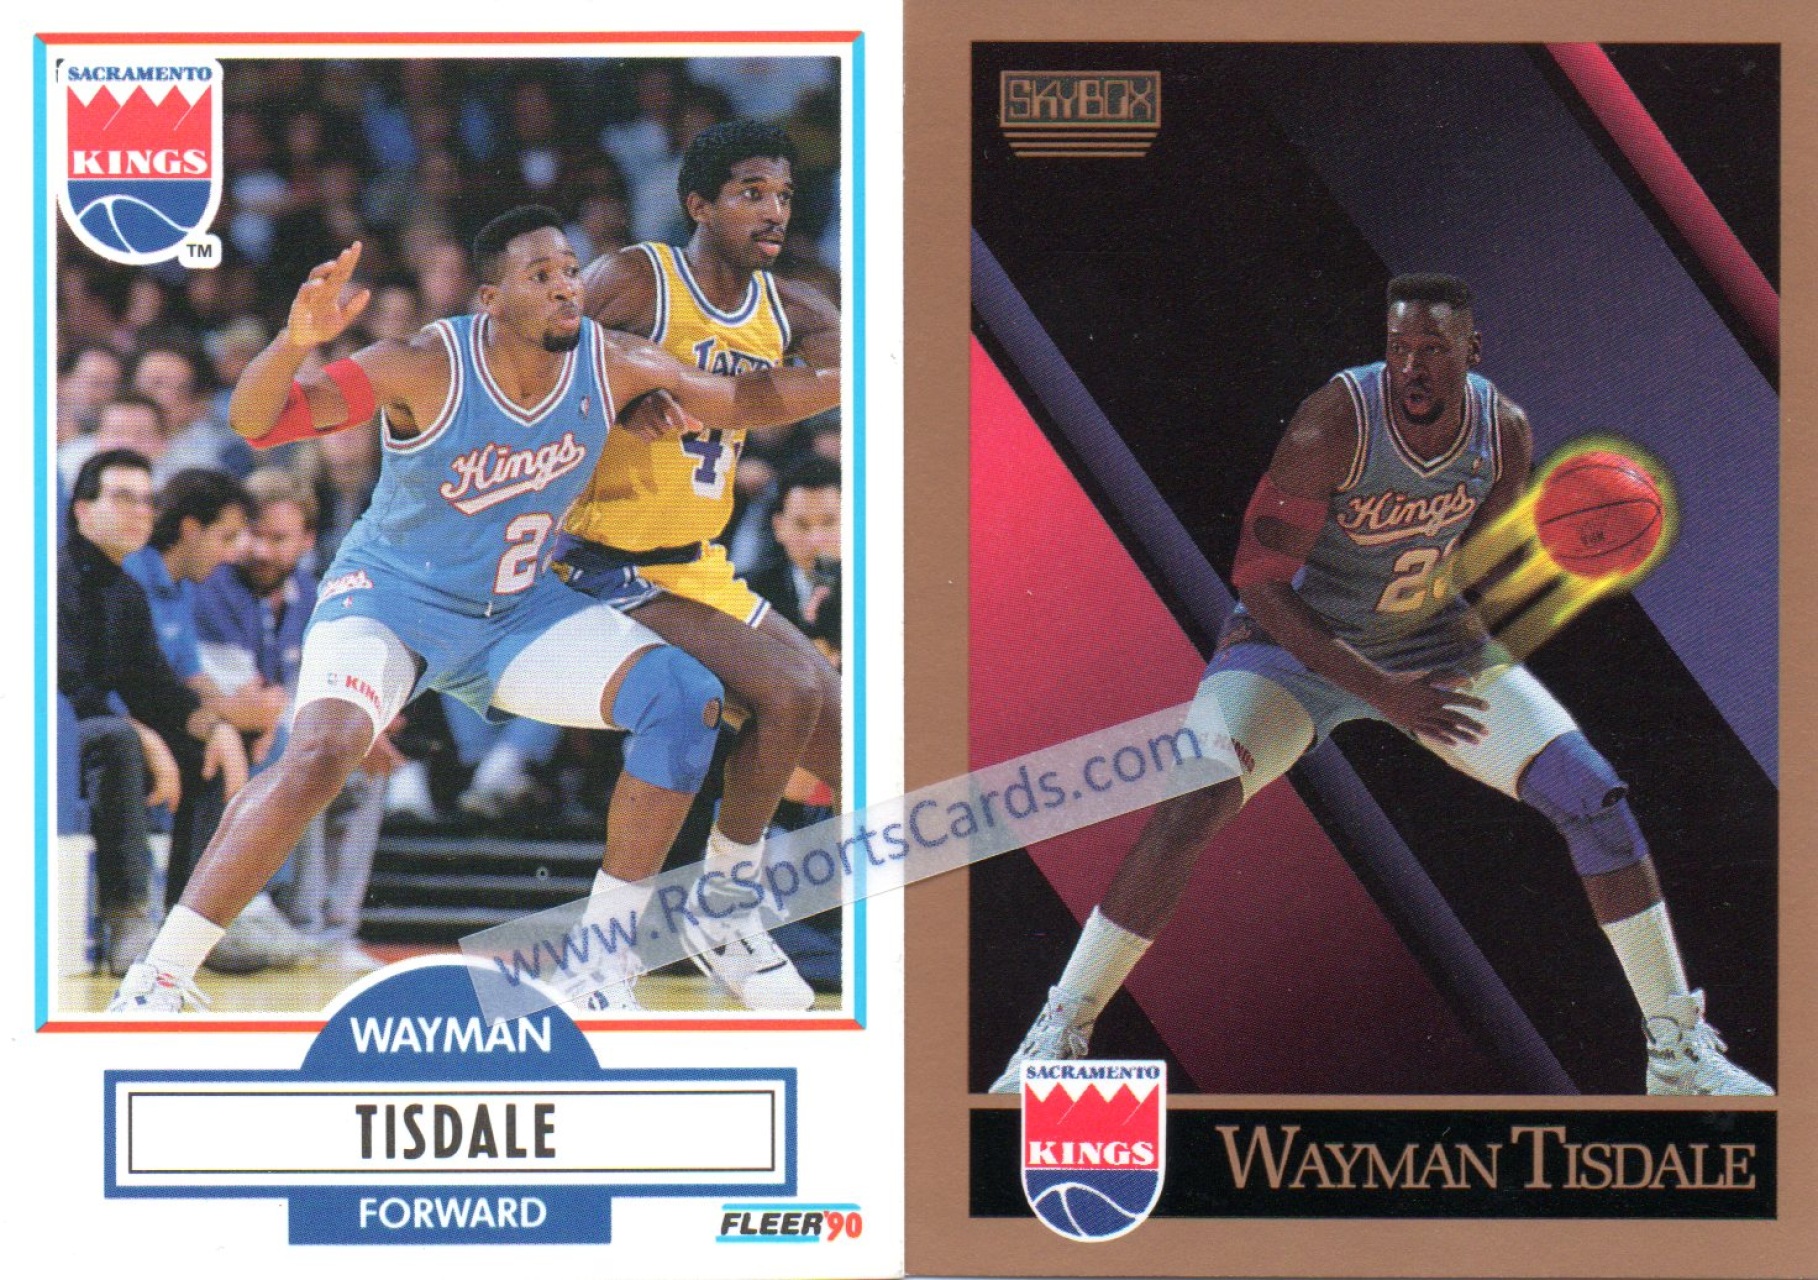  1989-90 Hoops Basketball #215 Danny Ainge Sacramento Kings  Official NBA Trading Card : Collectibles & Fine Art